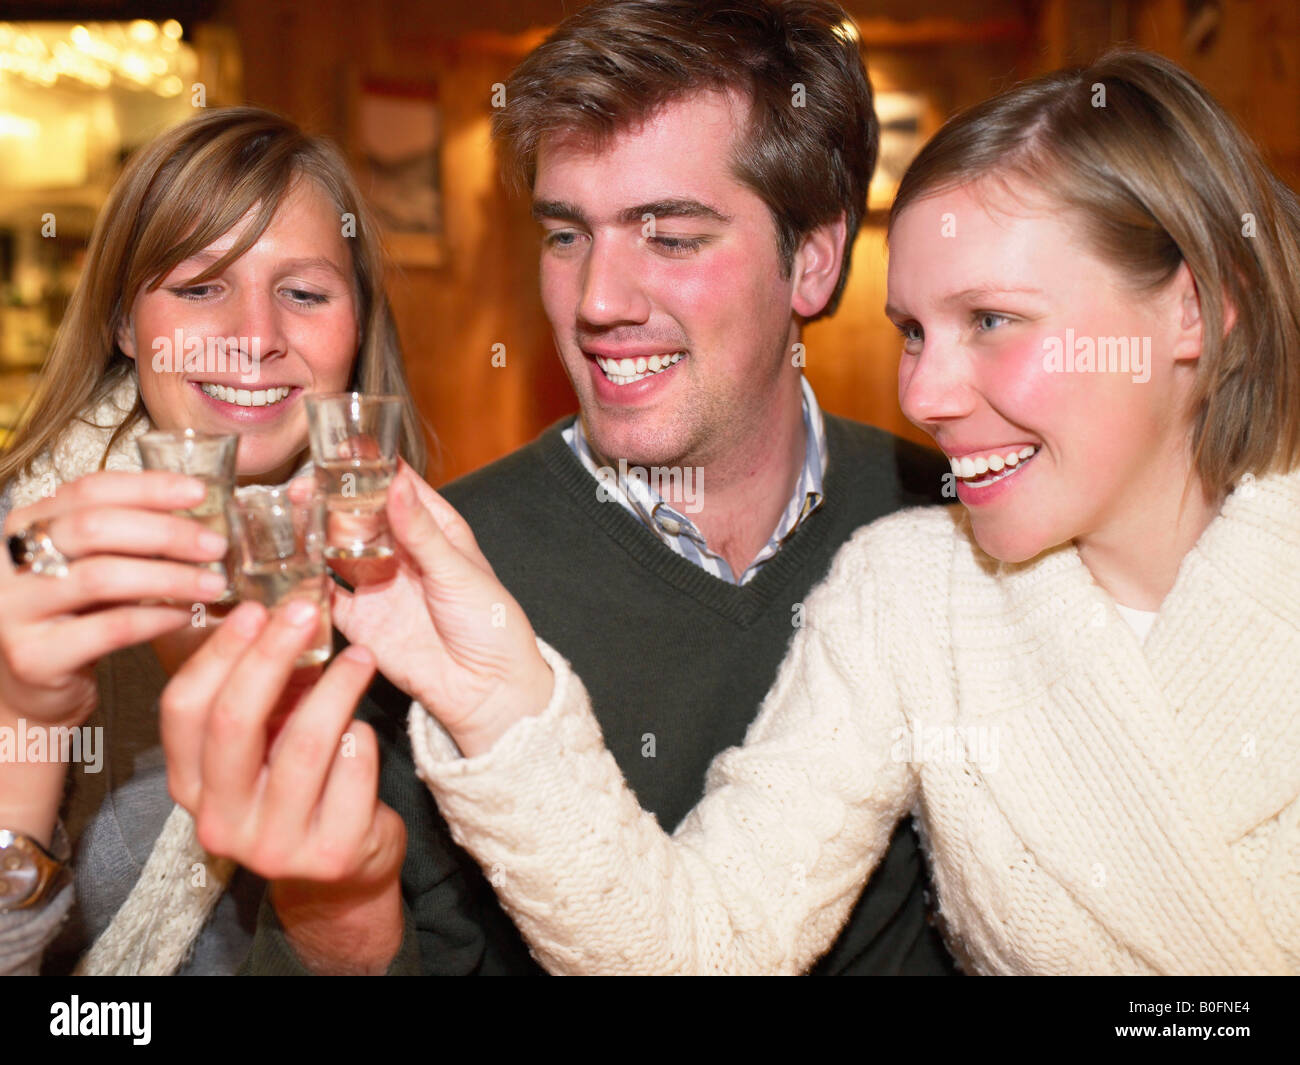 Group having shots in restaurant Stock Photo